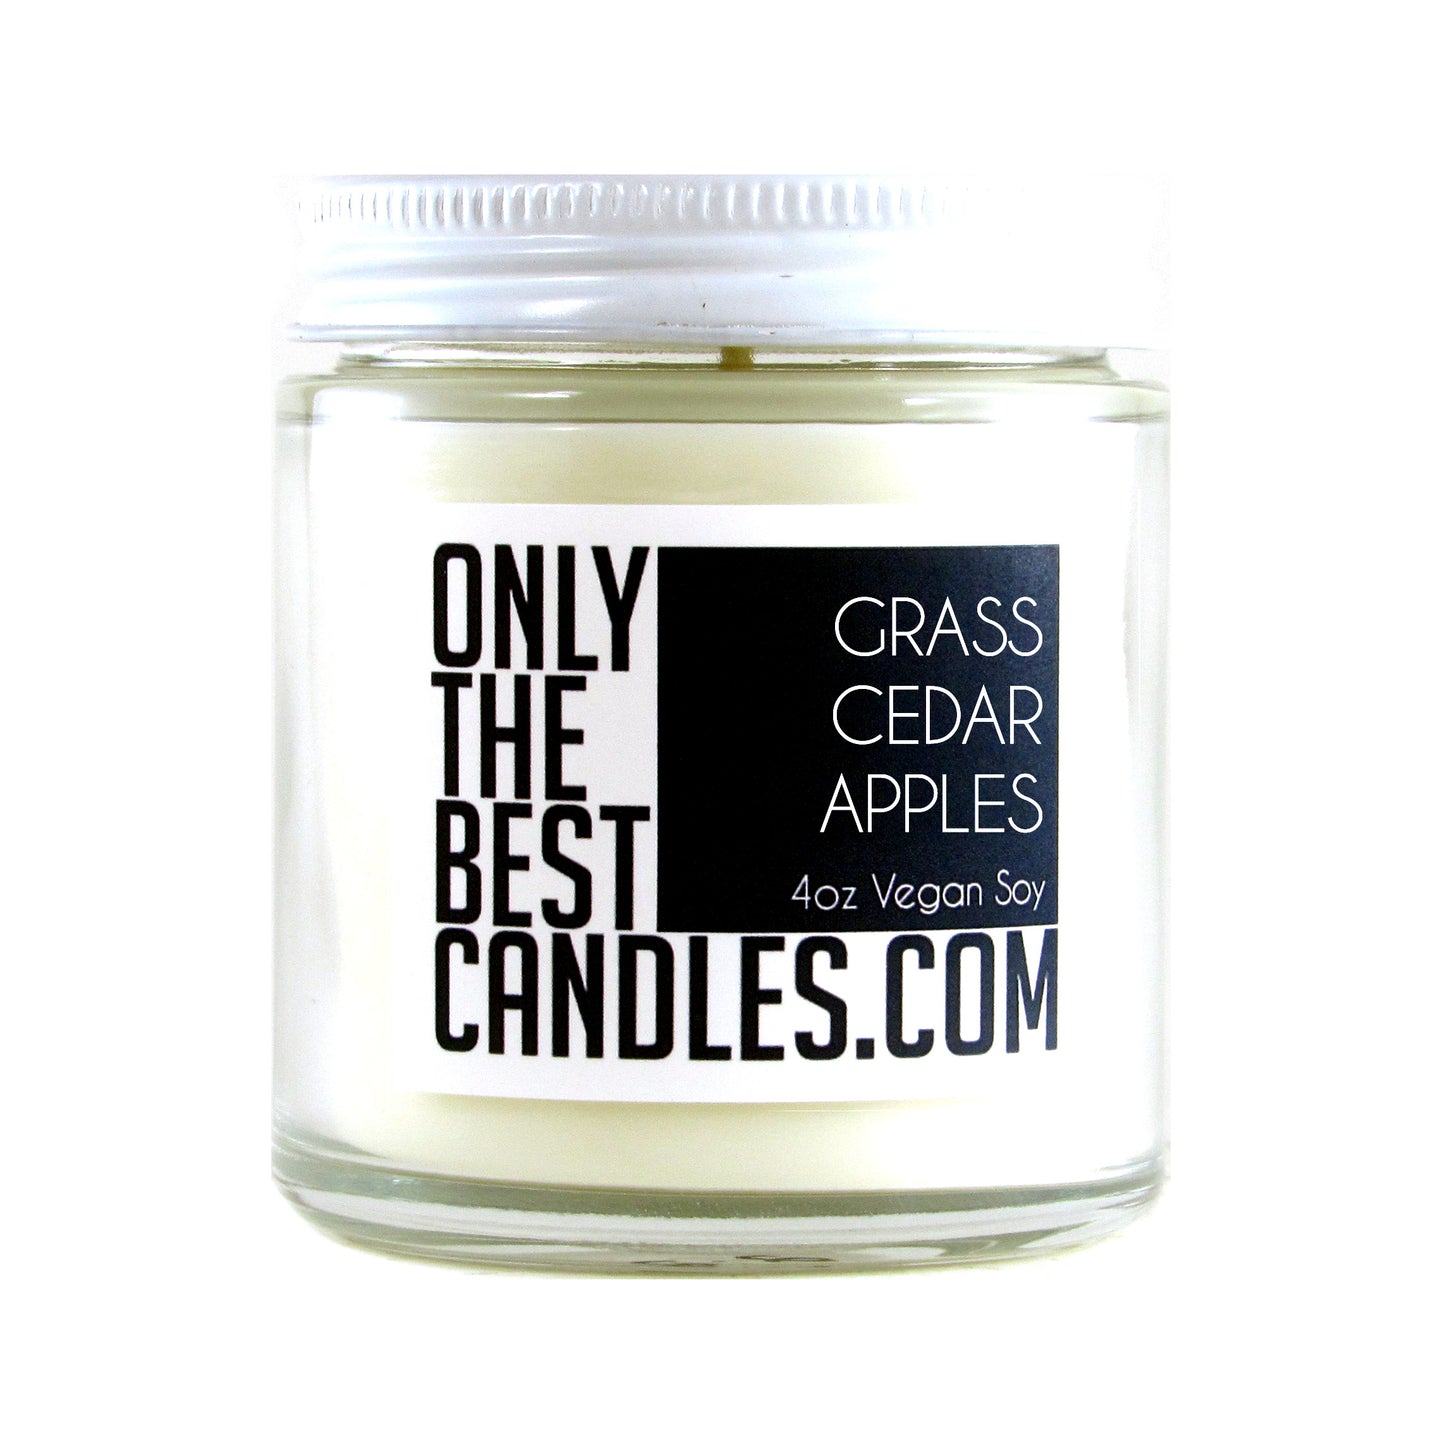 Grass Cedar Apples 4oz Candle